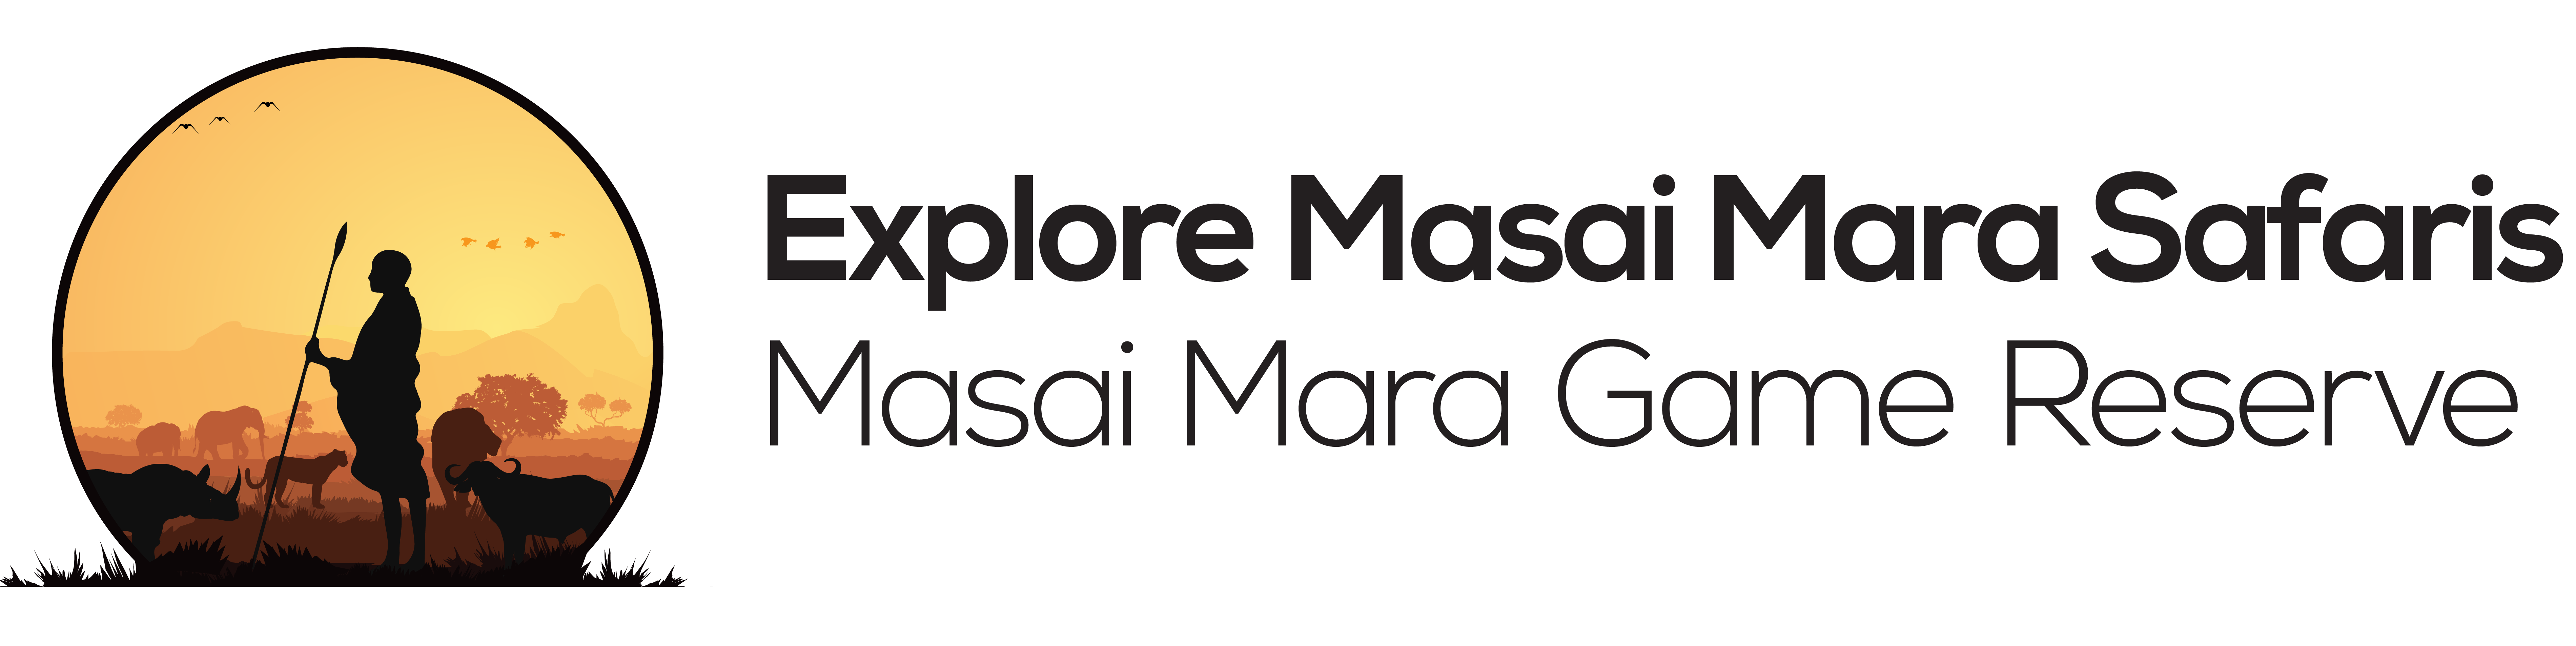 Explore masai mara | 8 Days best of Masai Mara safari - Explore masai mara